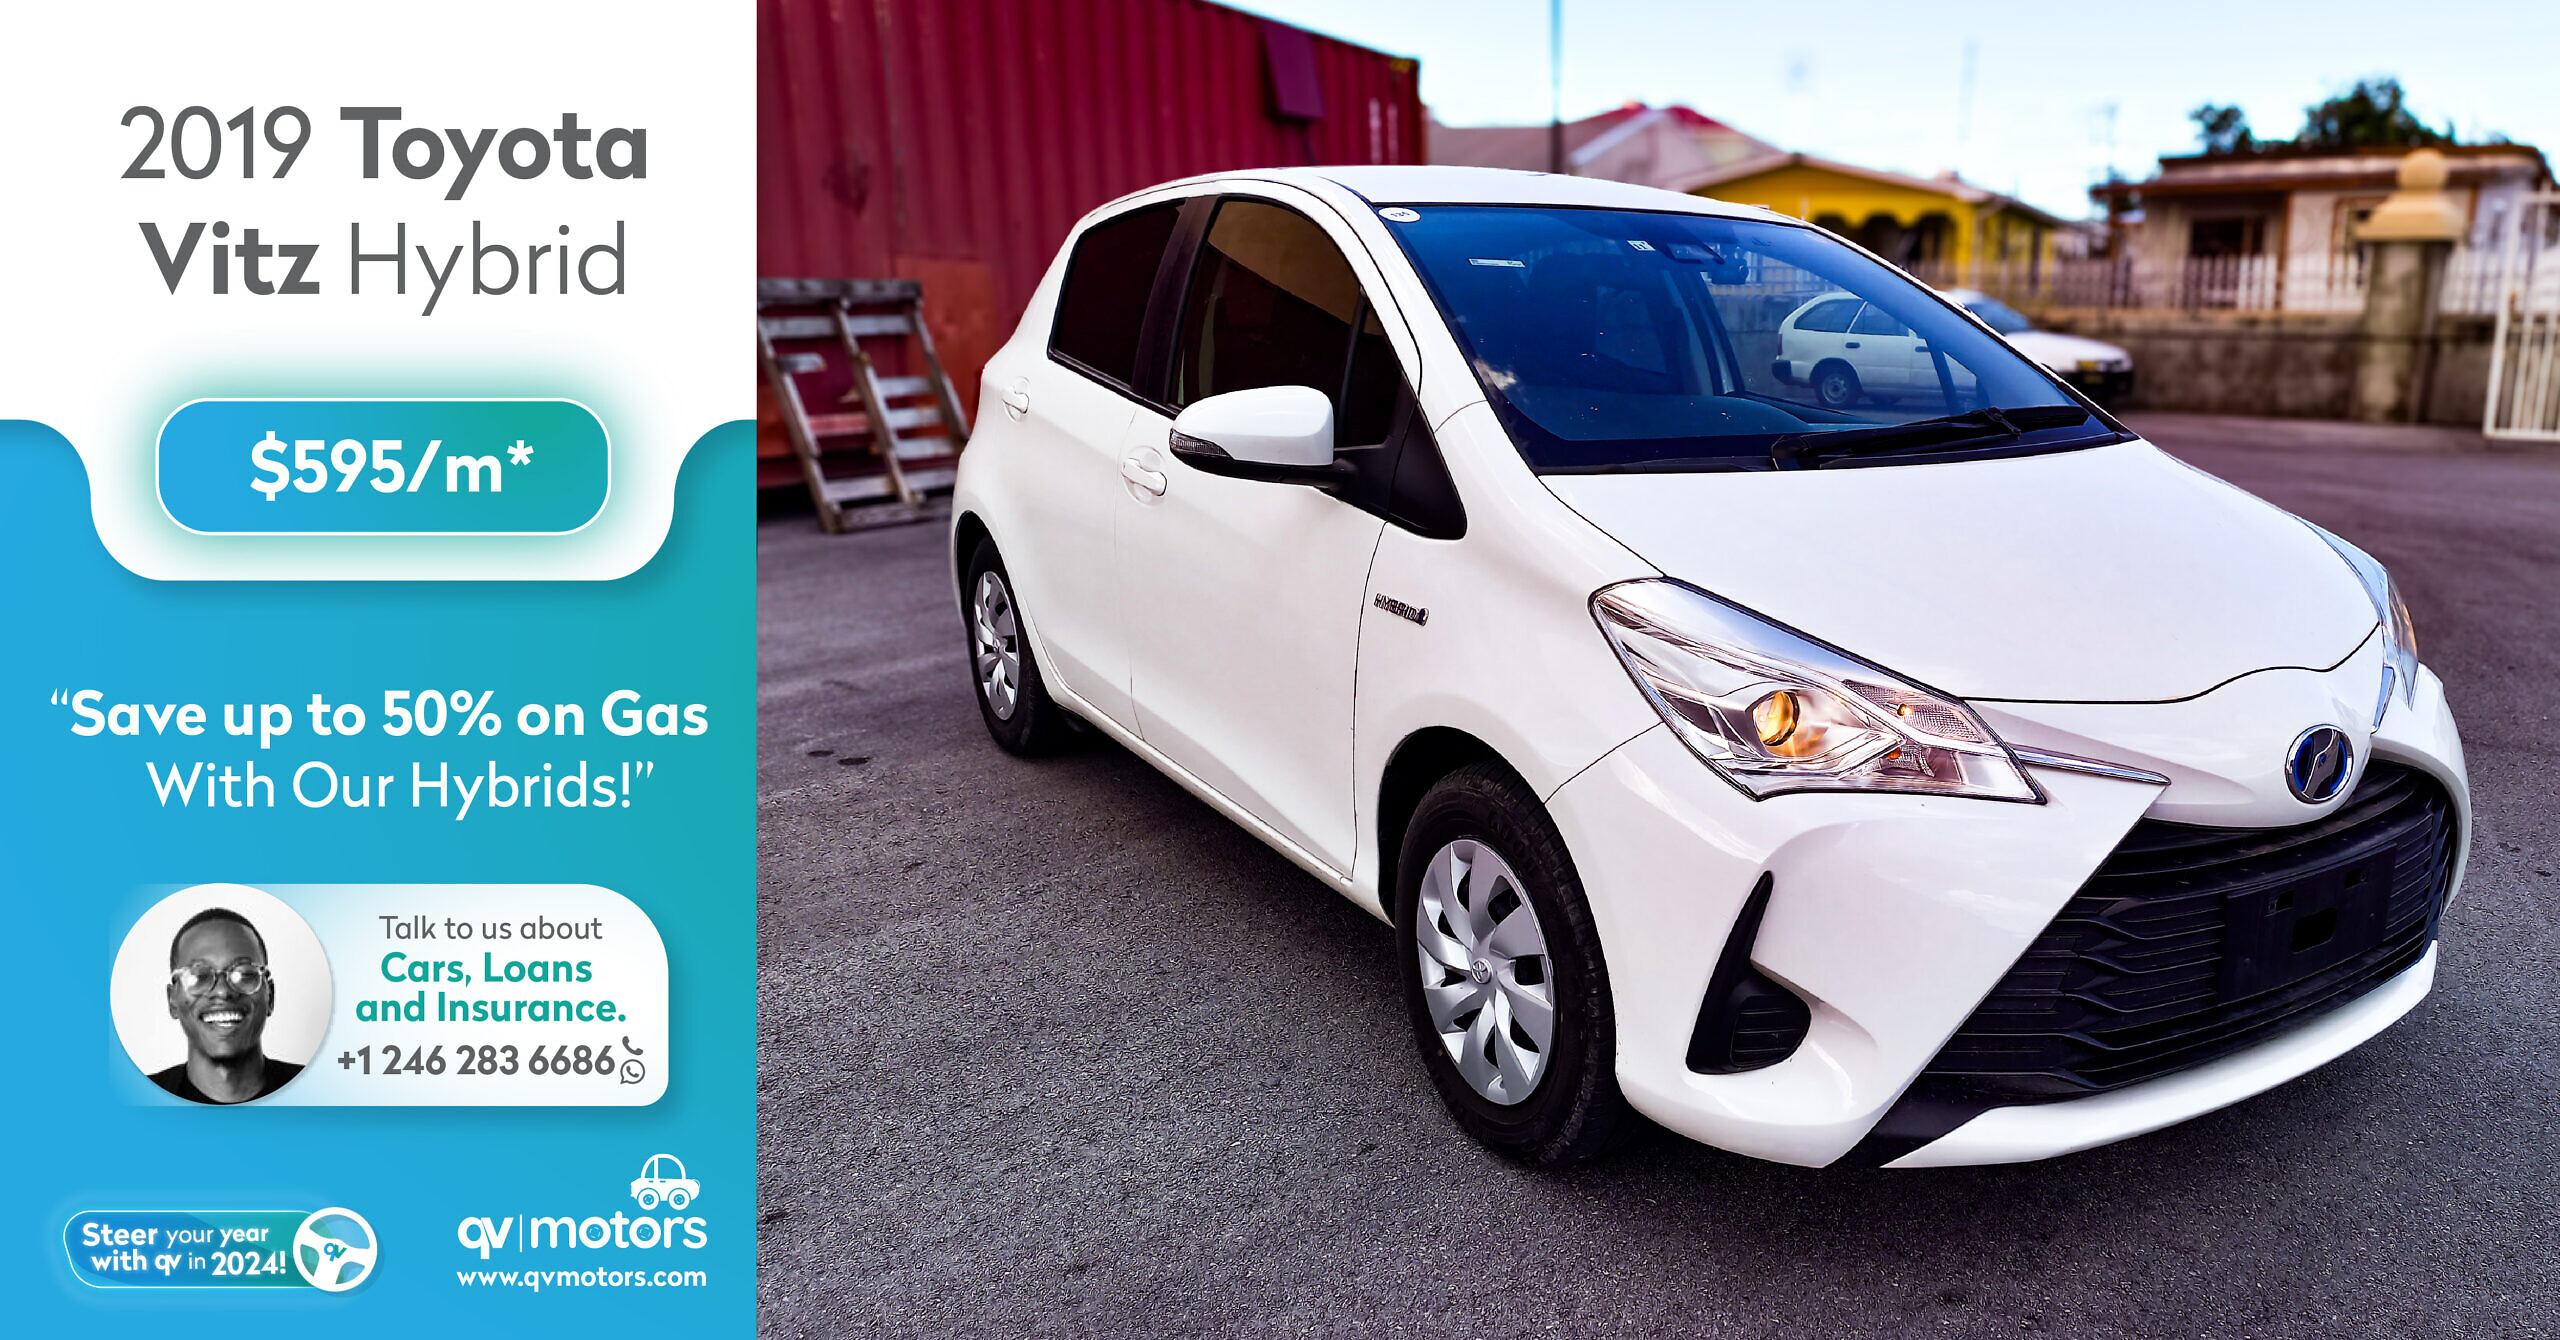 2019 Toyota Vitz Hybrid – Save Up to 50% on Gas!